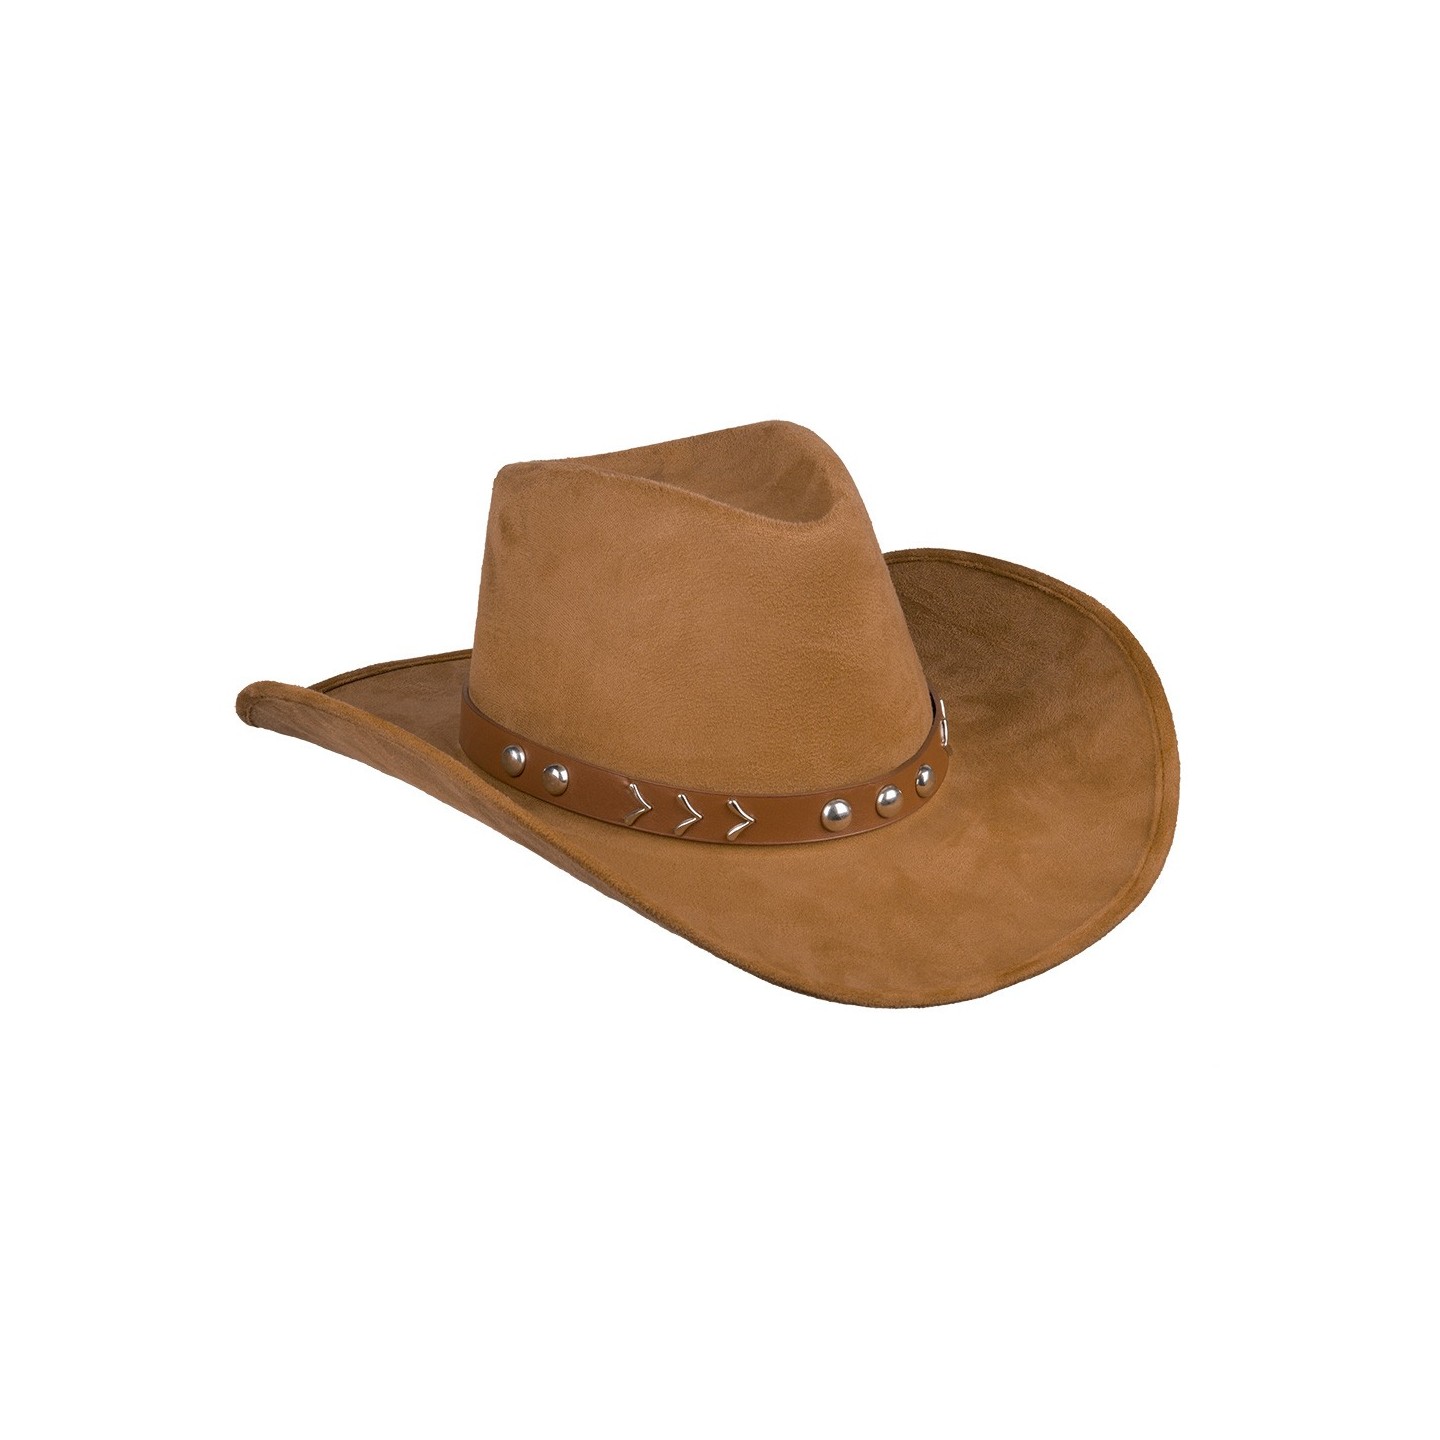 blad Bloody heroïsch Cowboyhoed bruin suede look | Jokershop.be - Cowboy accessoires